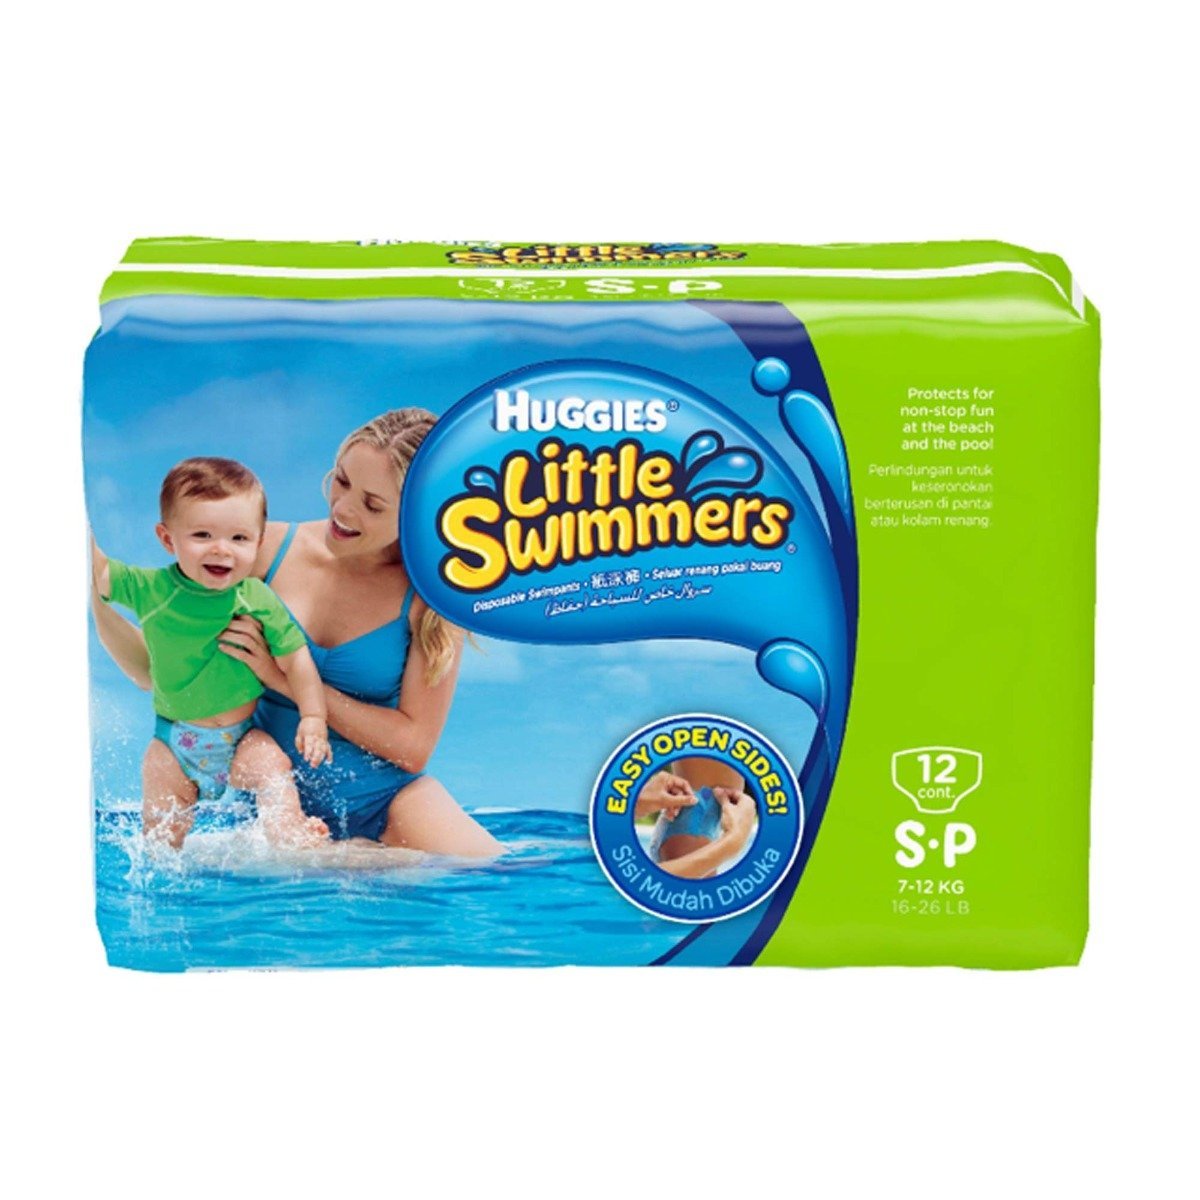 Huggies Little Swimmers Small Swim Pants Diaper 7-12kg – 12 Count - Bloom Pharmacy